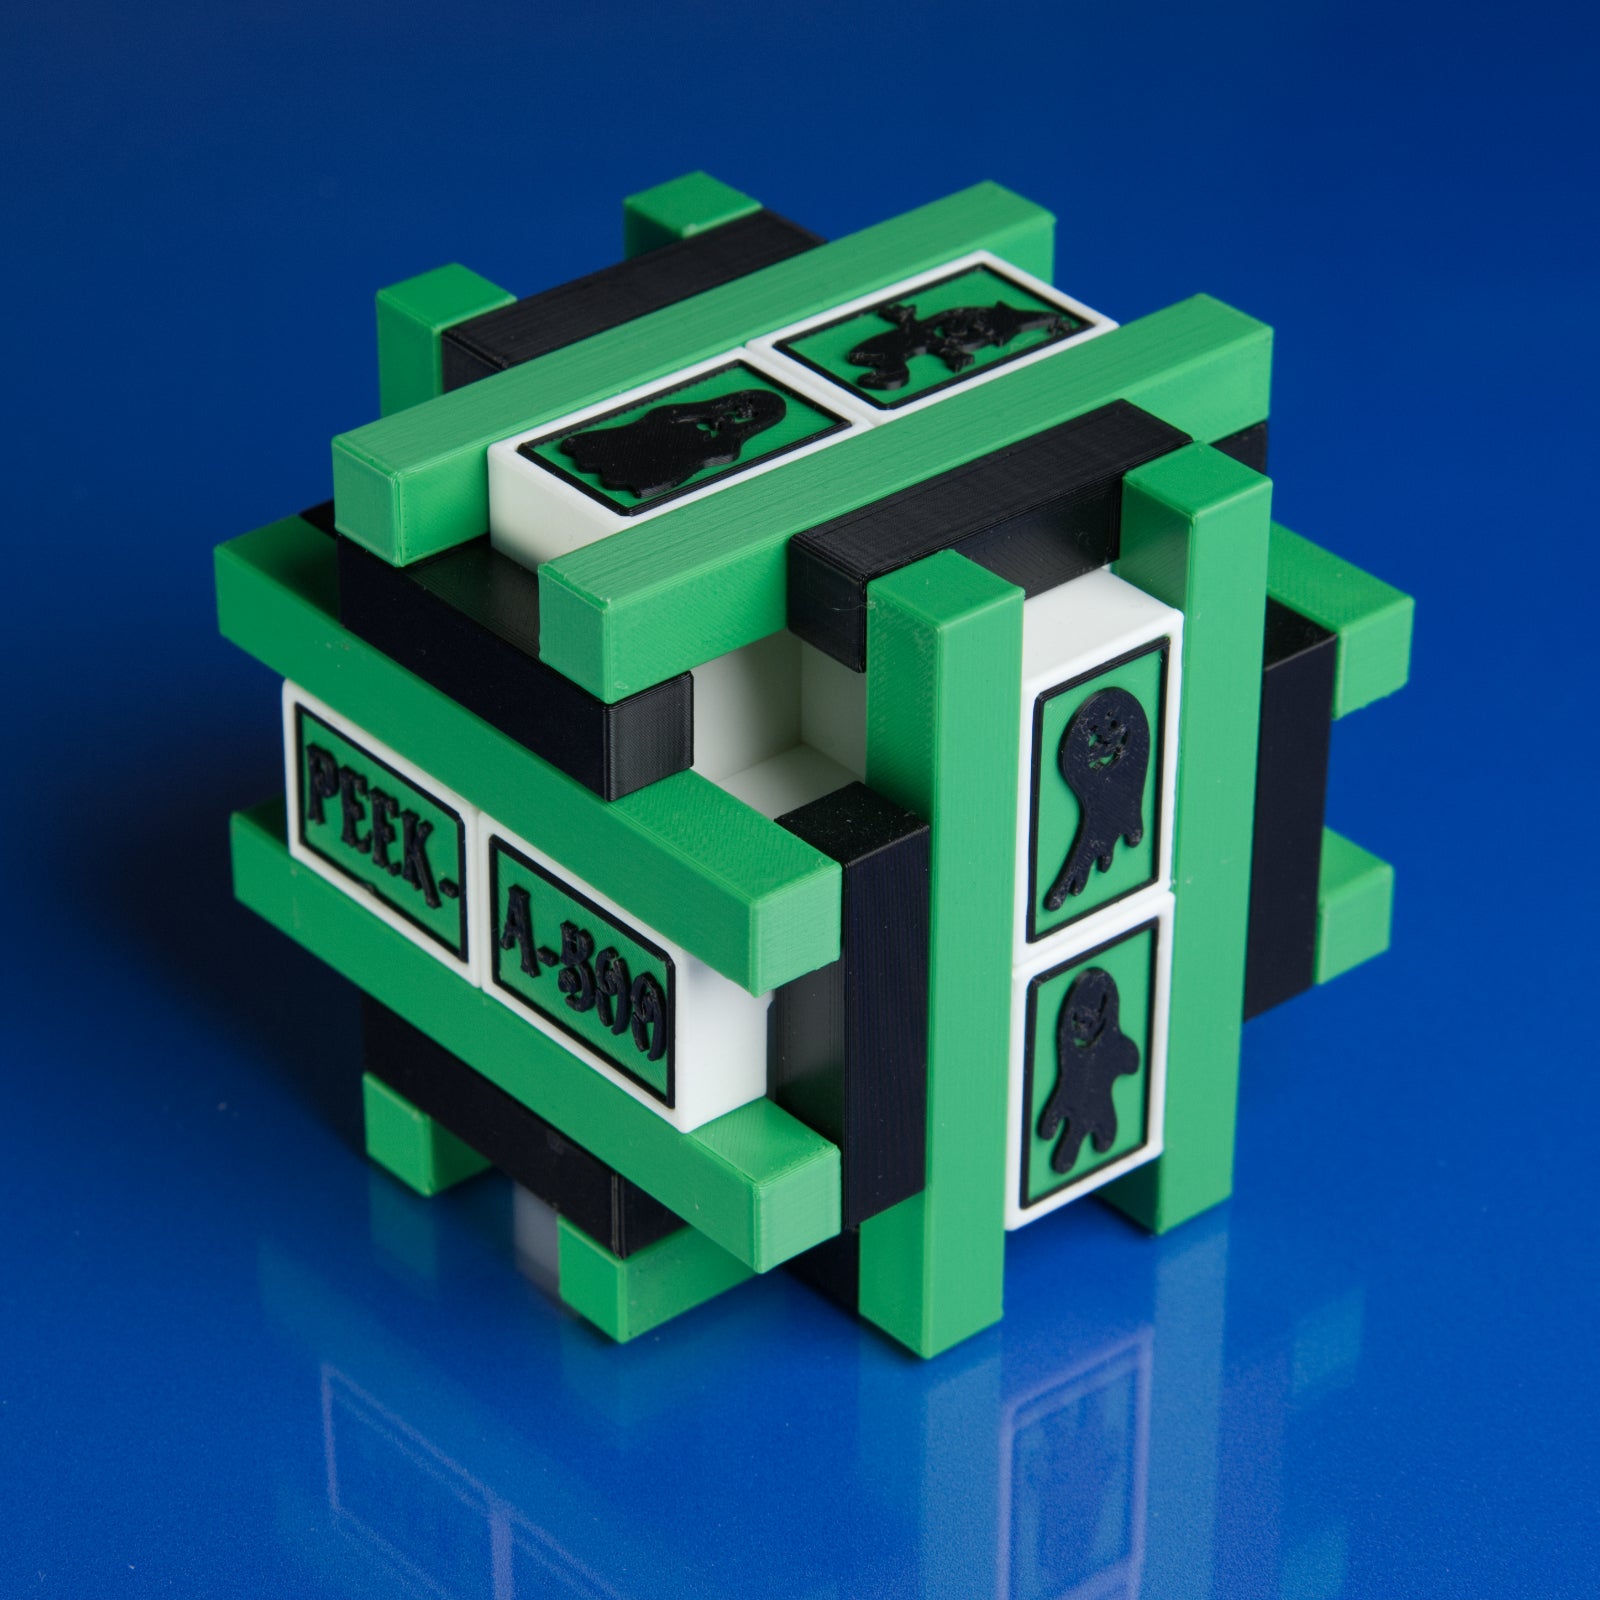 Peek-A-Boo (Green) - Level 31 - Dan Fast - Puzzle Playground